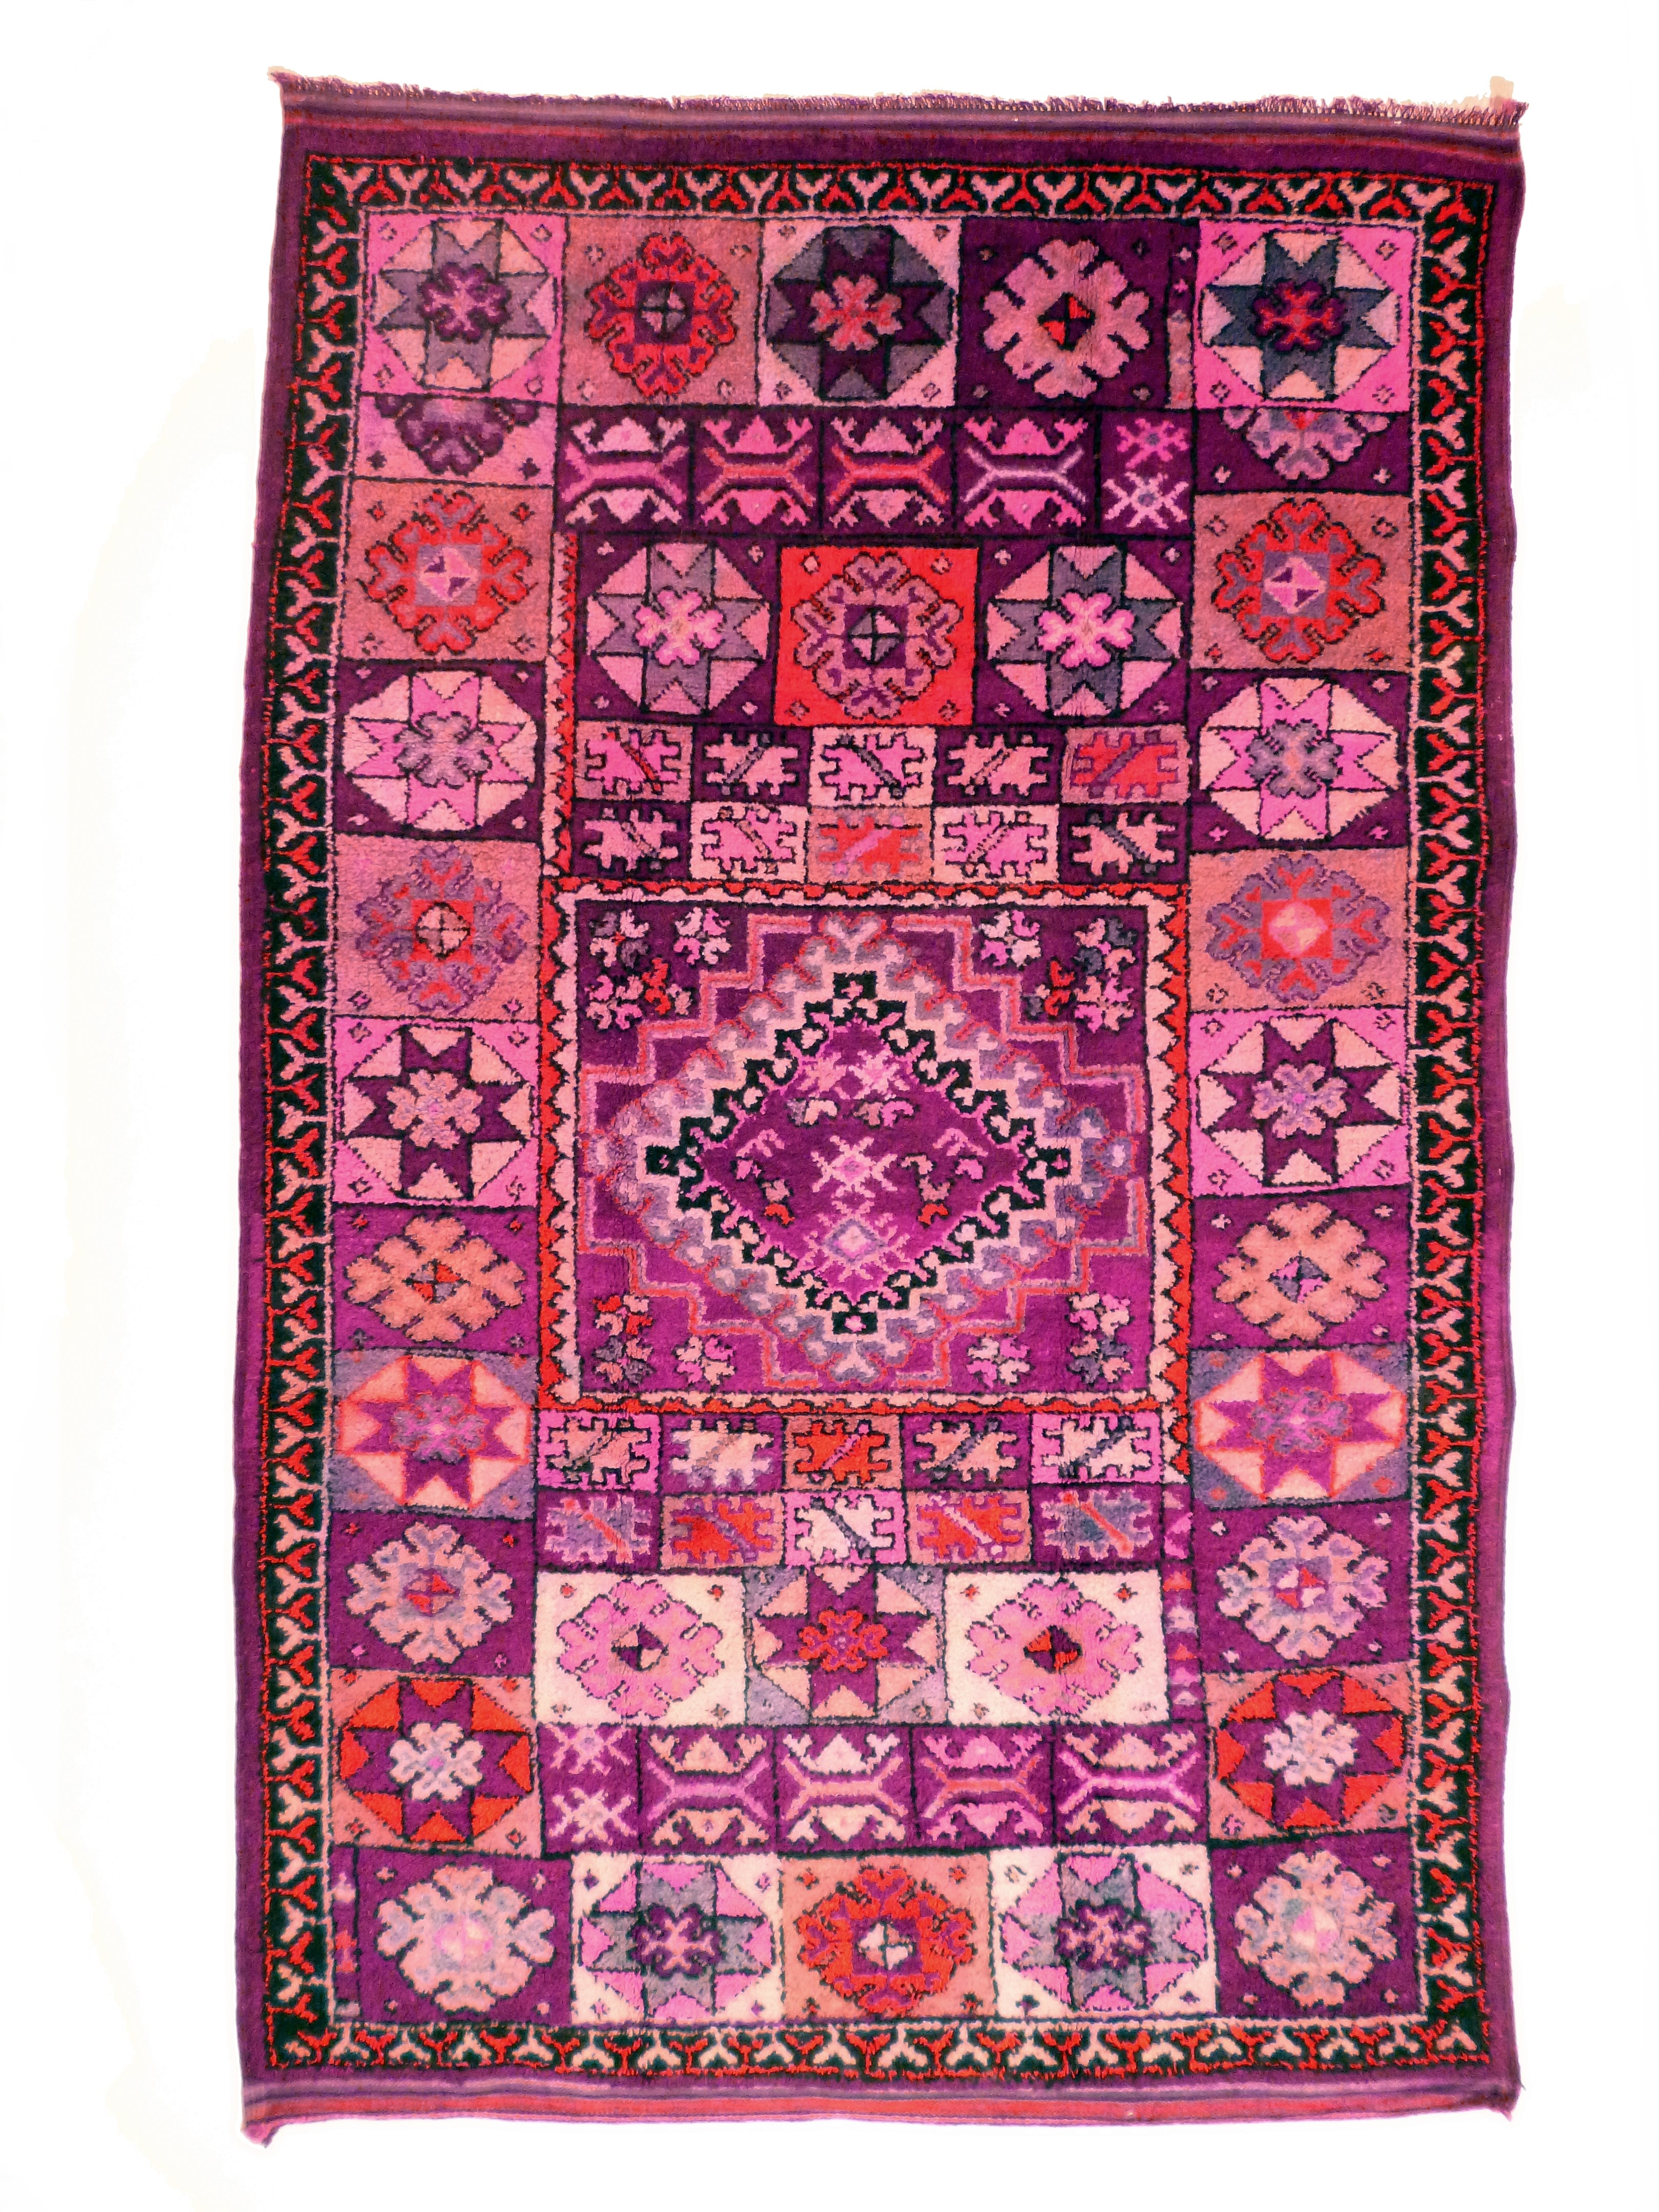 Vintage Moroccan Berber Carpet - Lilac, Pink and Orange North African rug